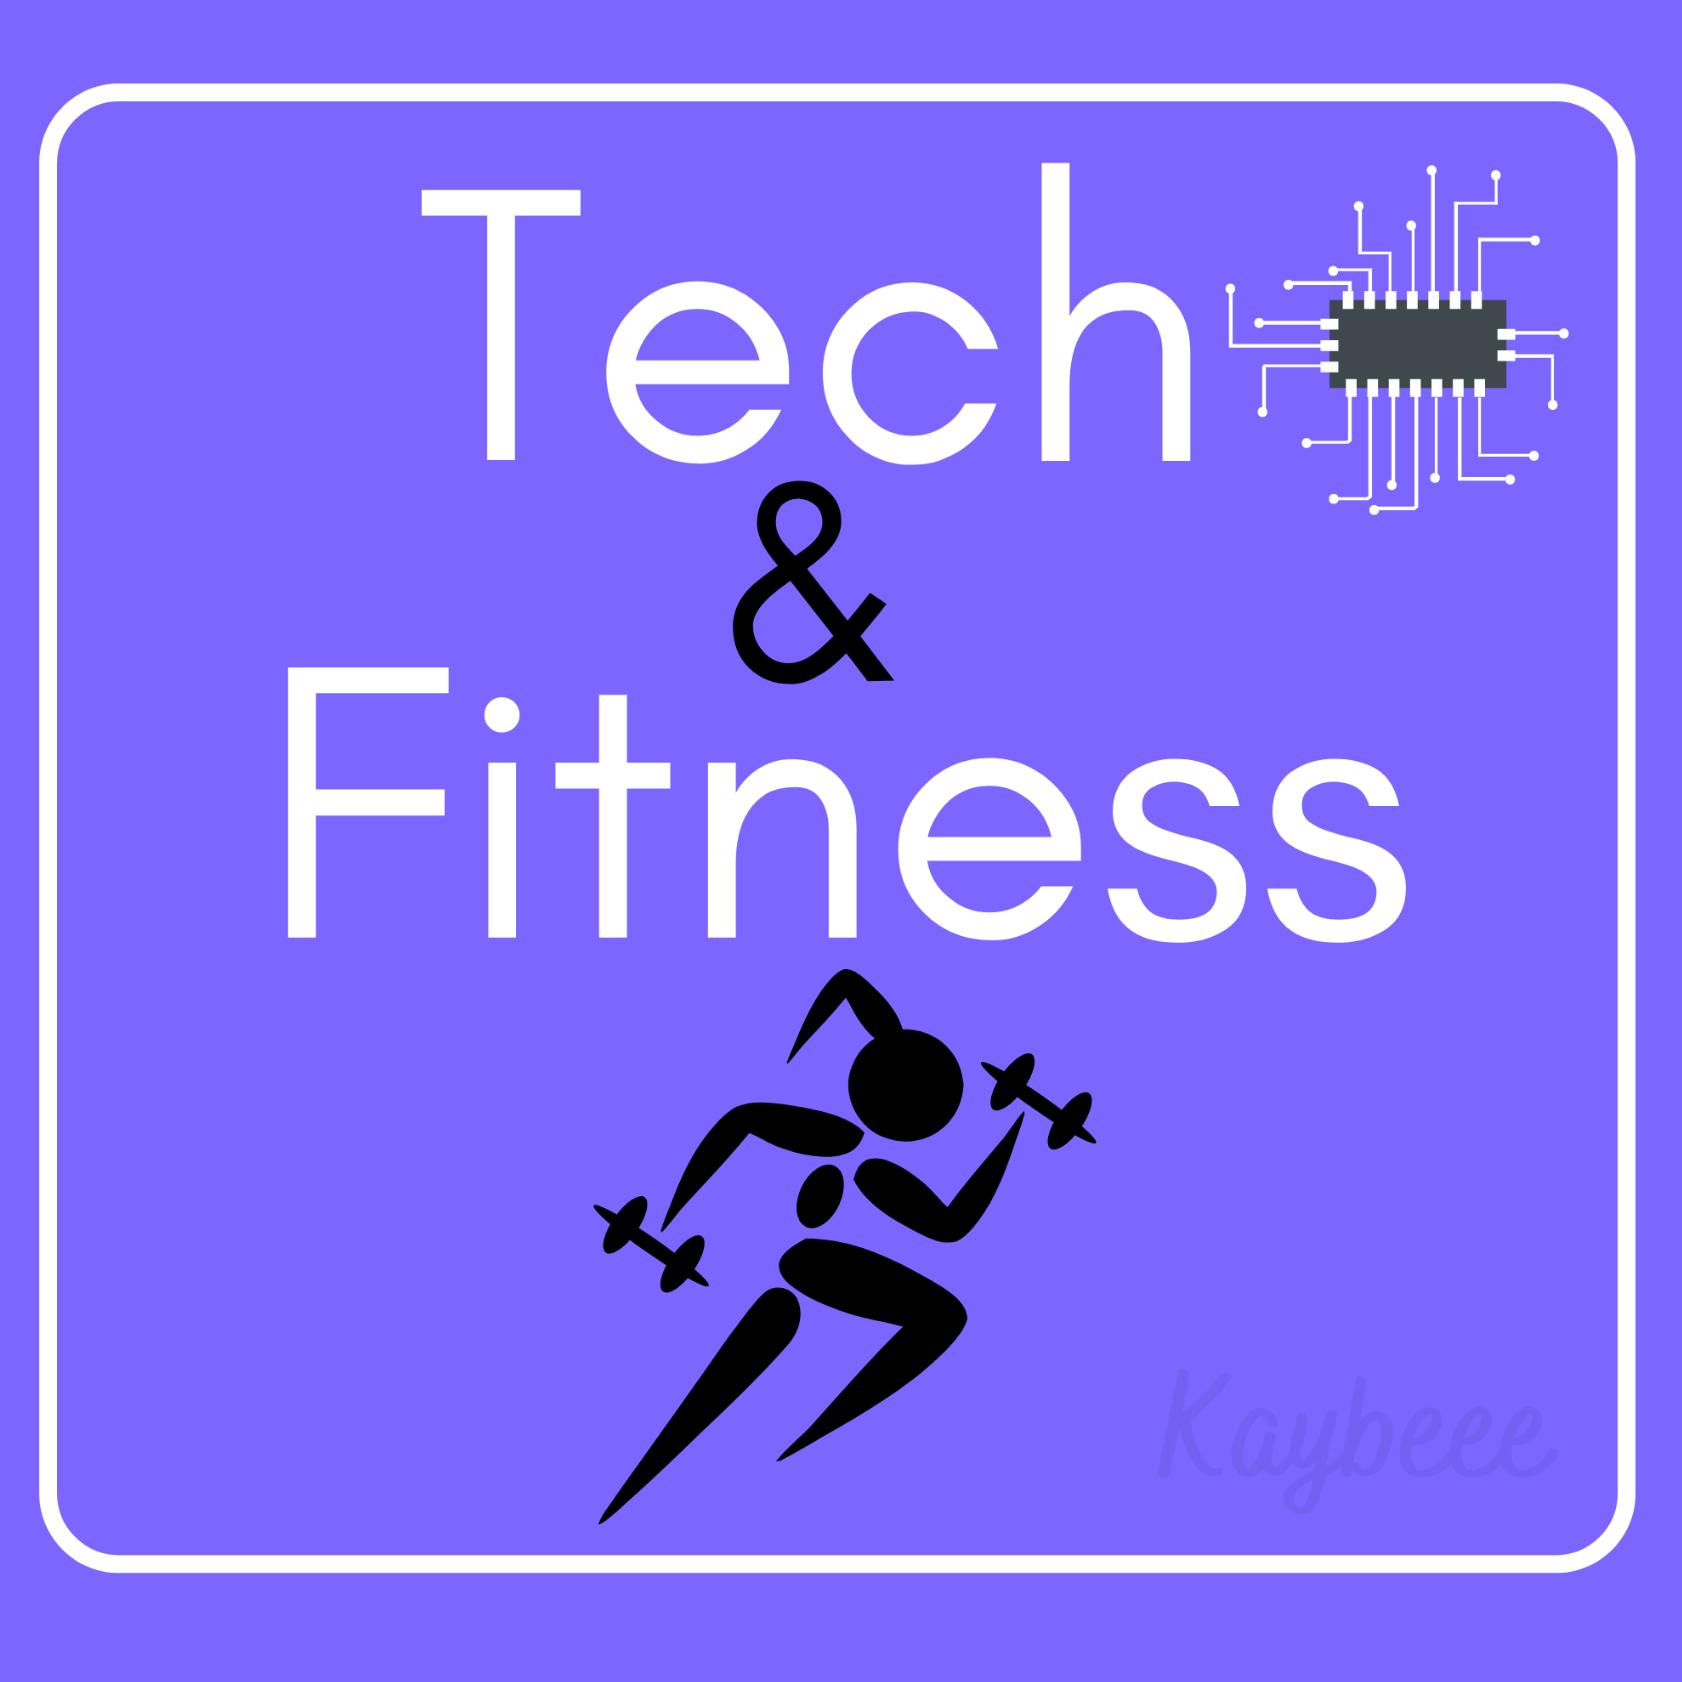 Tech News: The Fitness Tracker Wave!